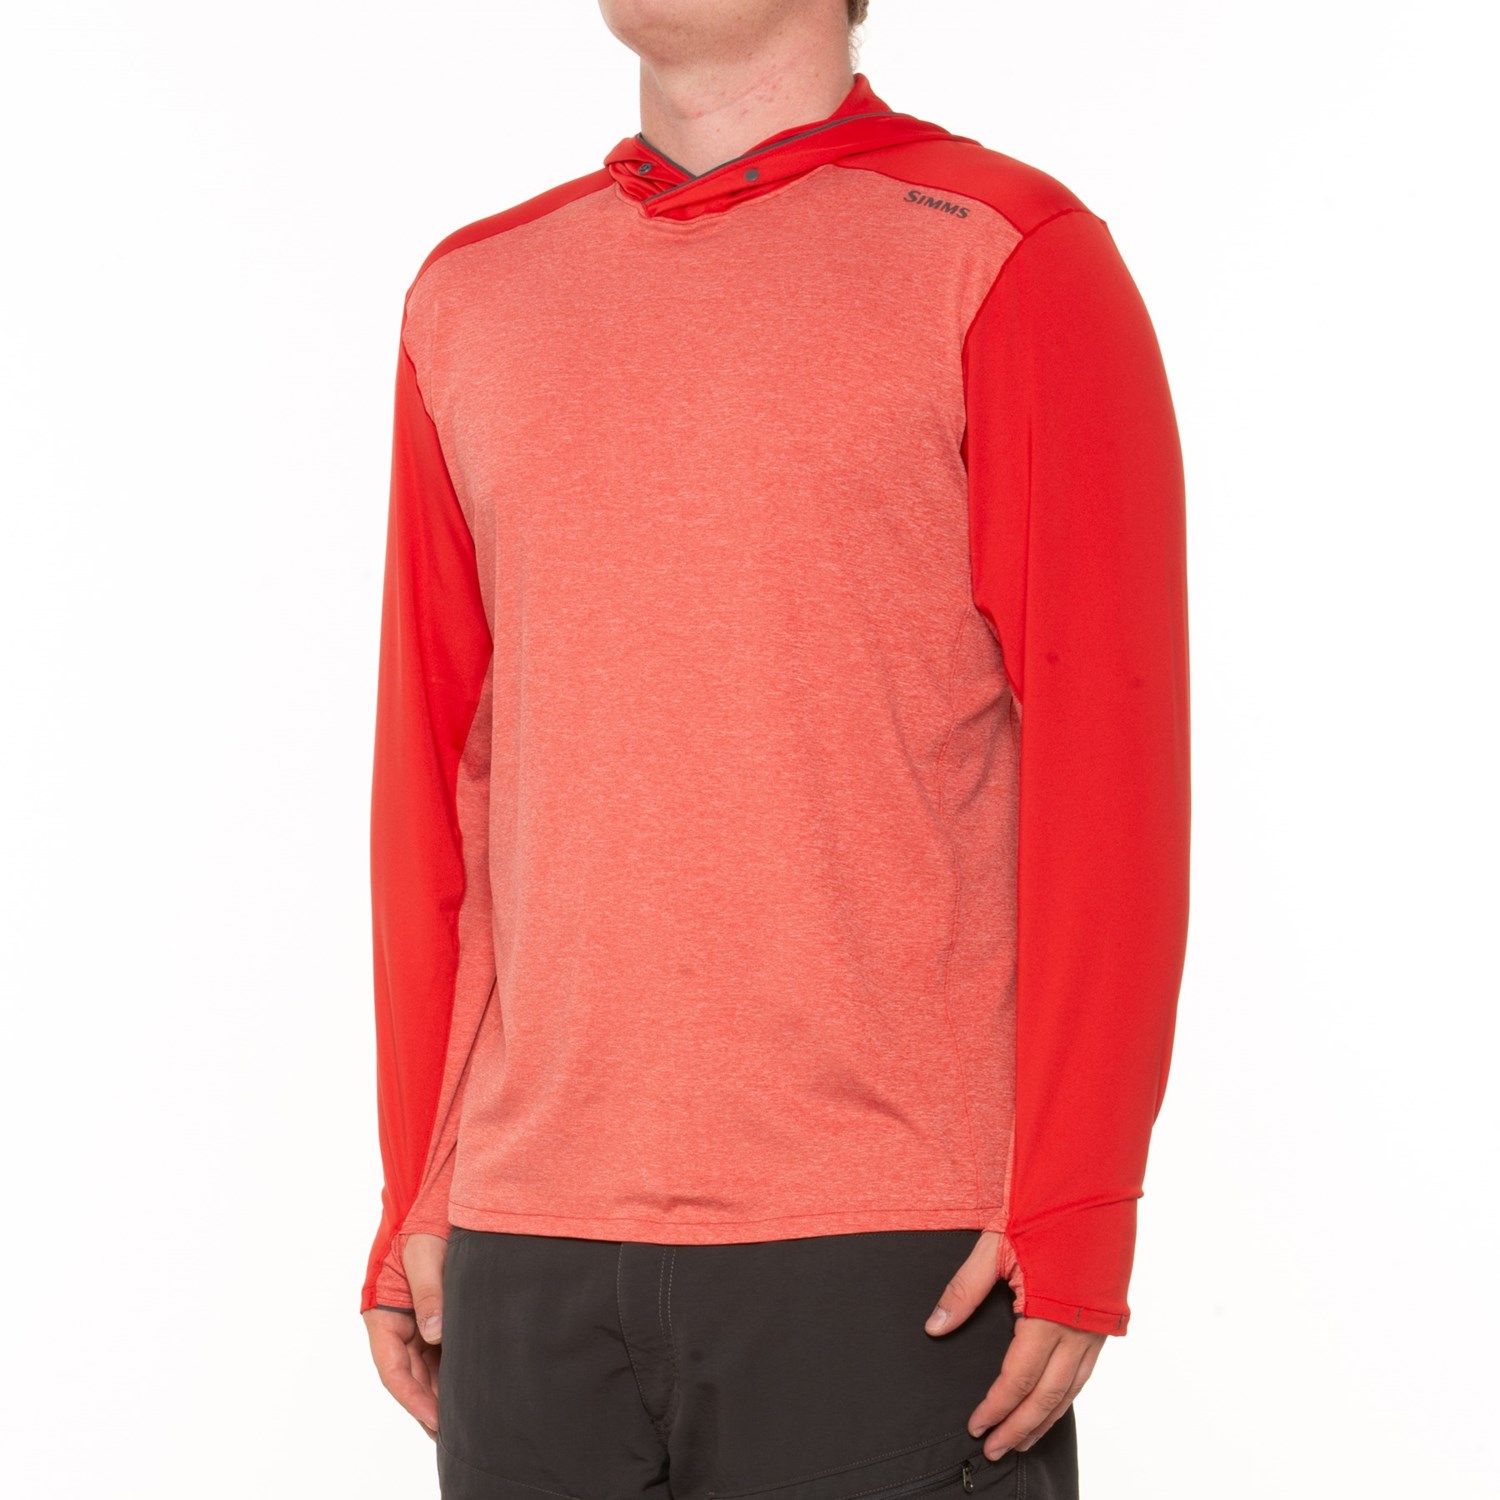 Simms Men’s fishing shirt UPF 50 Orange and Grey XL